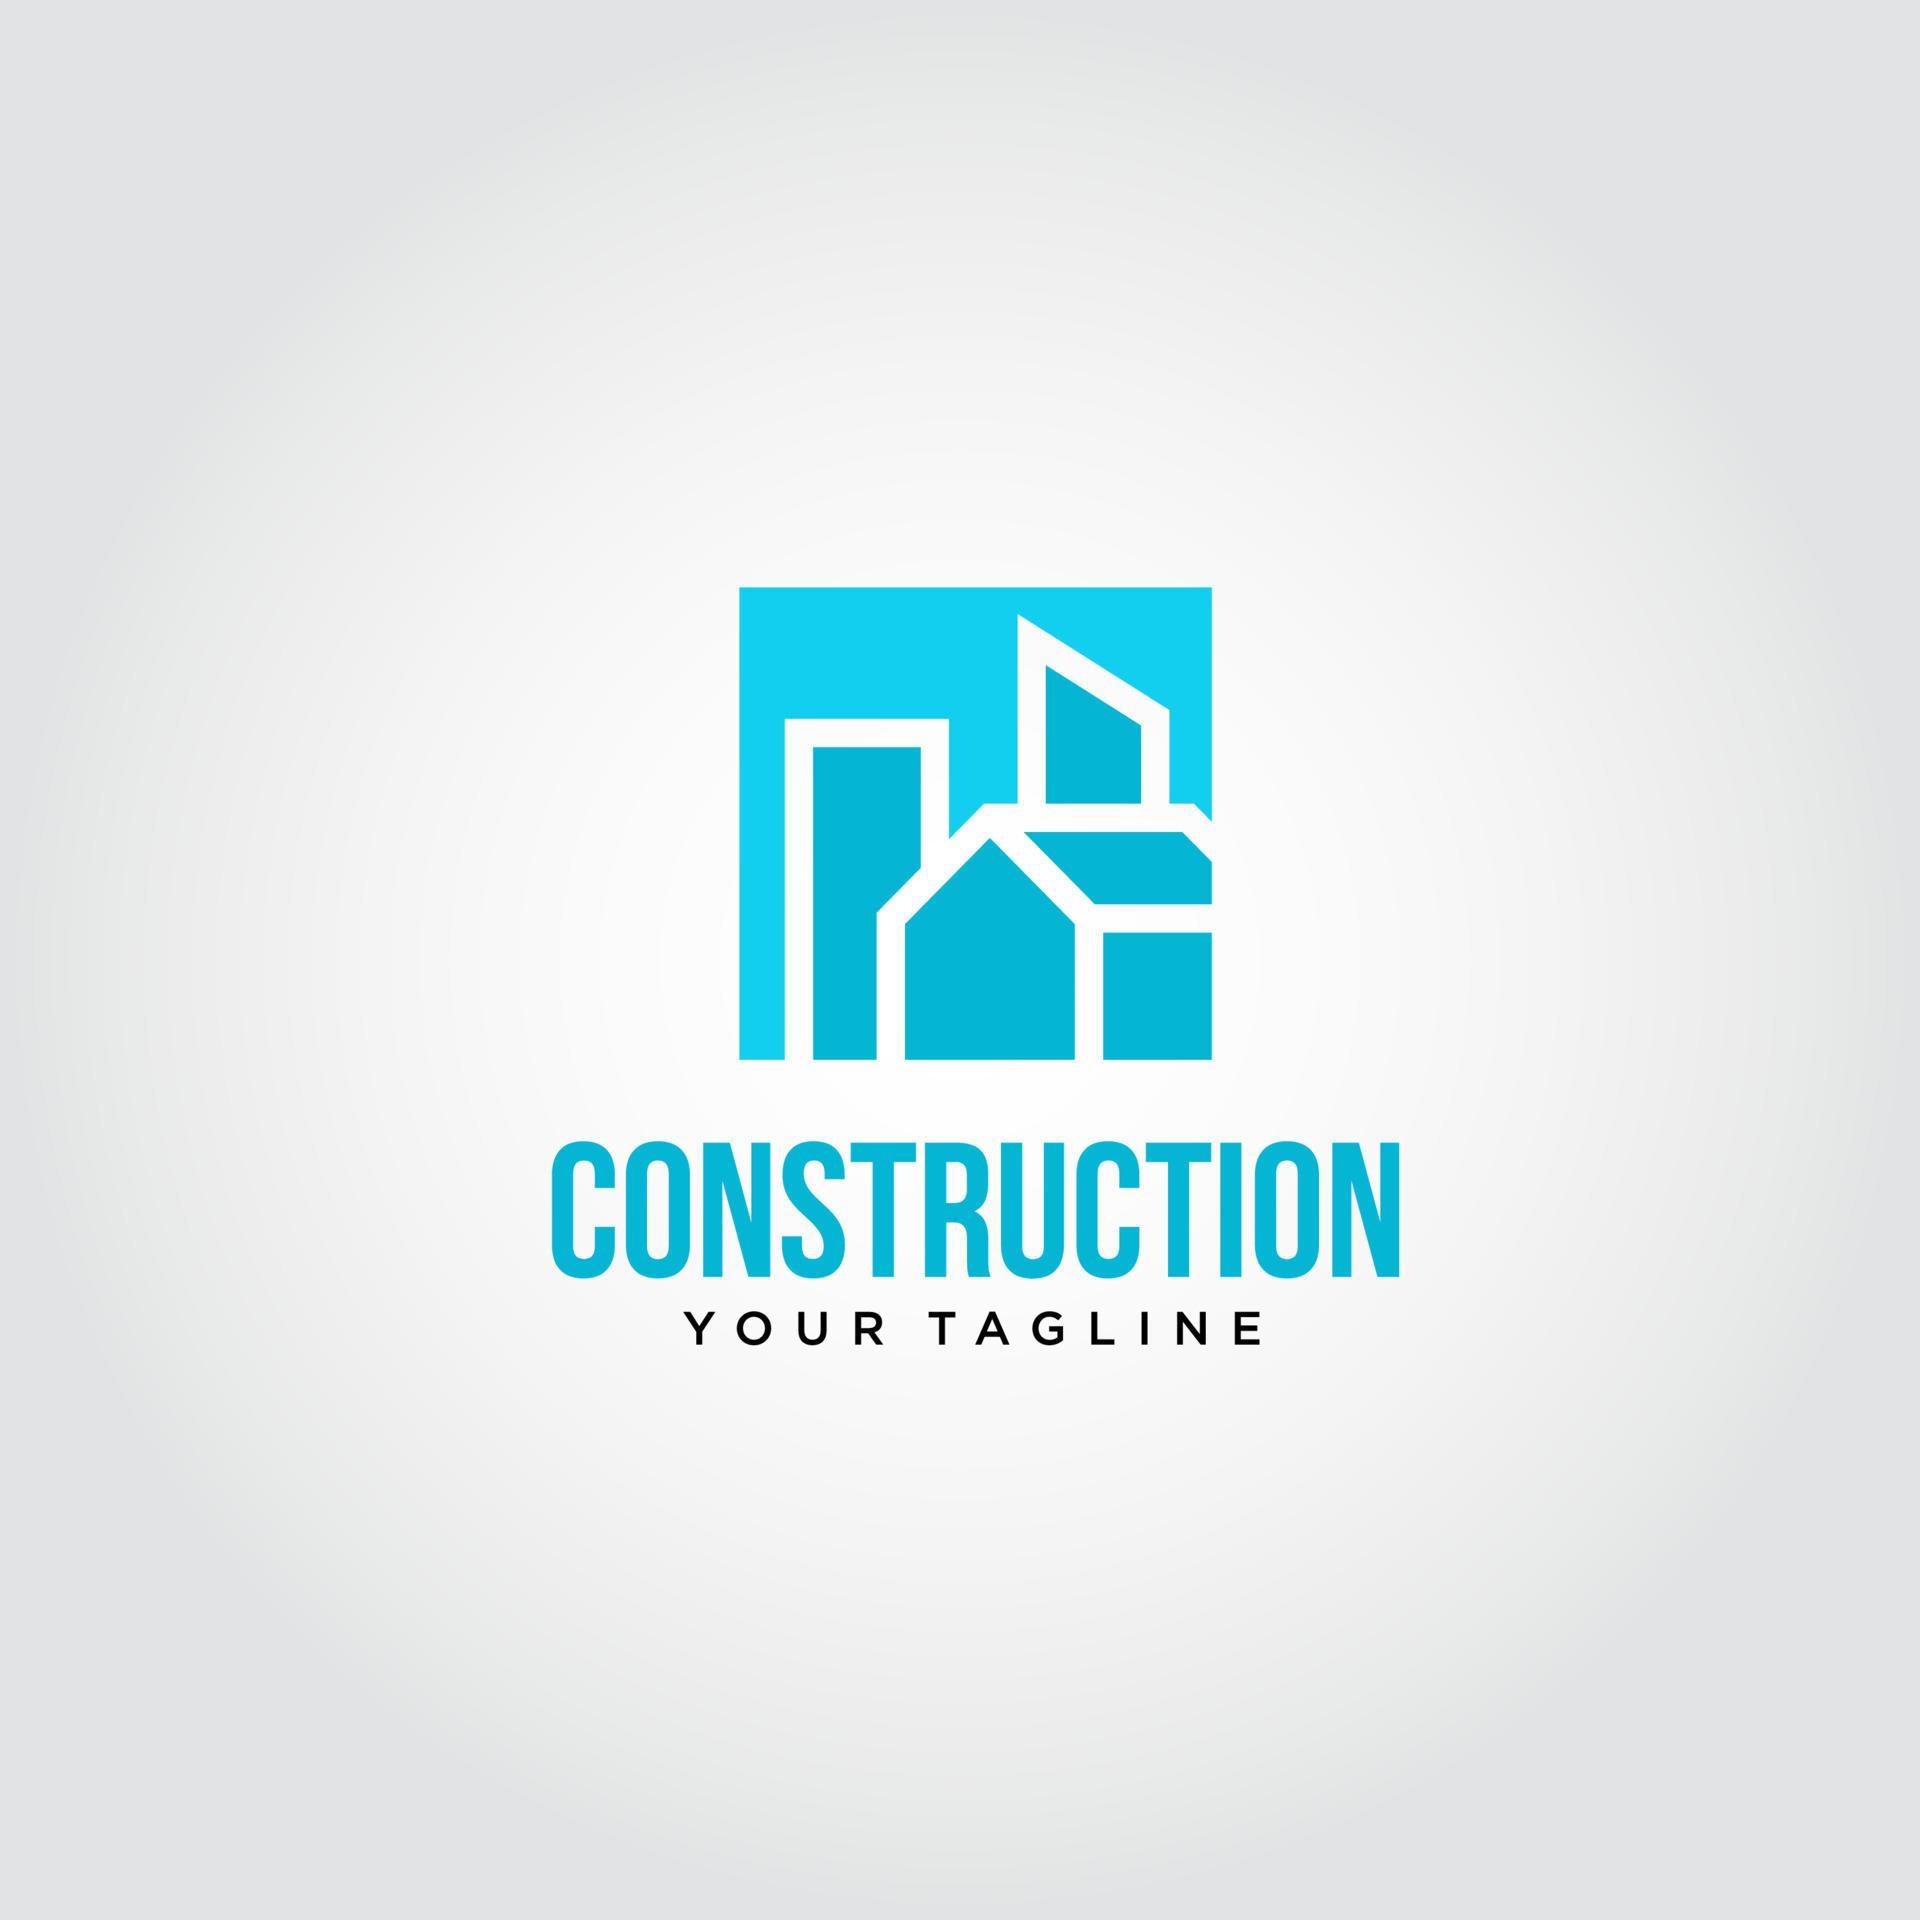 Construction logo design vector. Suitable for your business logo ...